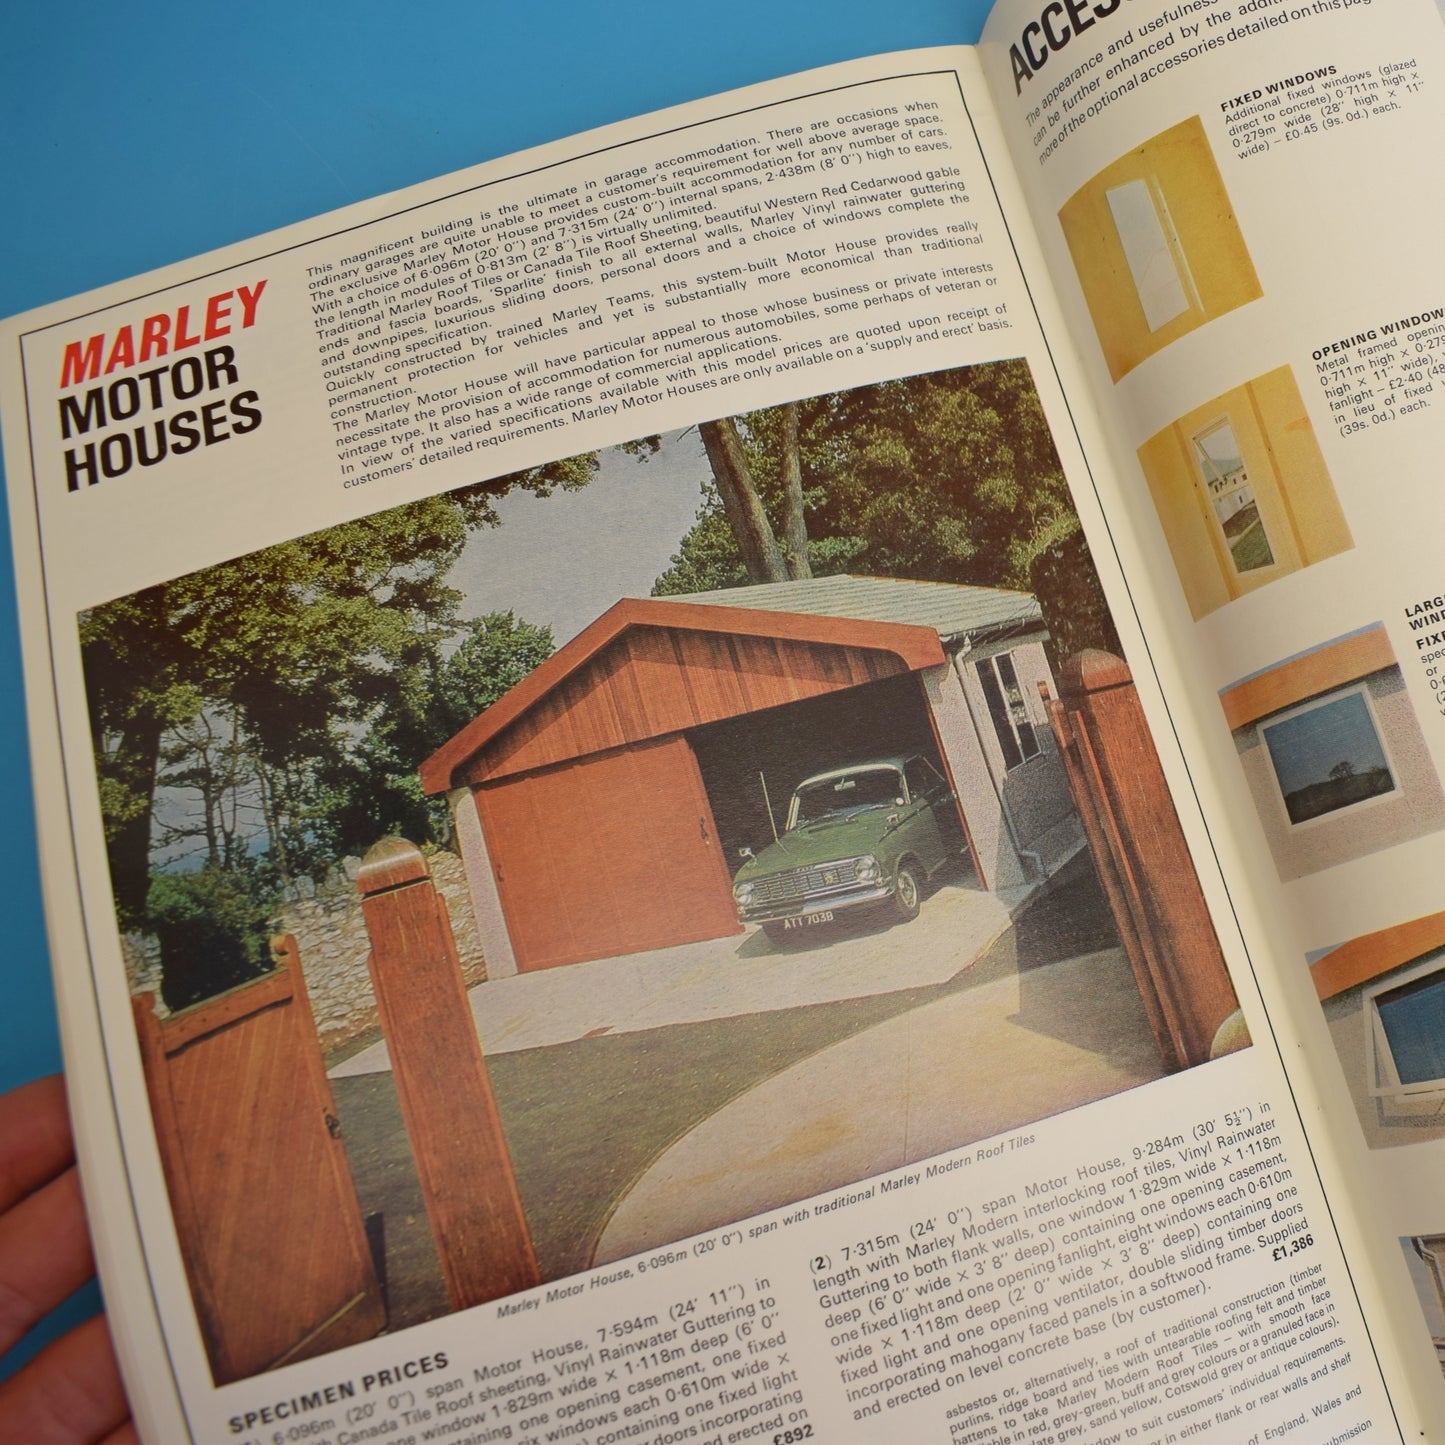 Vintage 1970s Marley Garage / Building Brochures